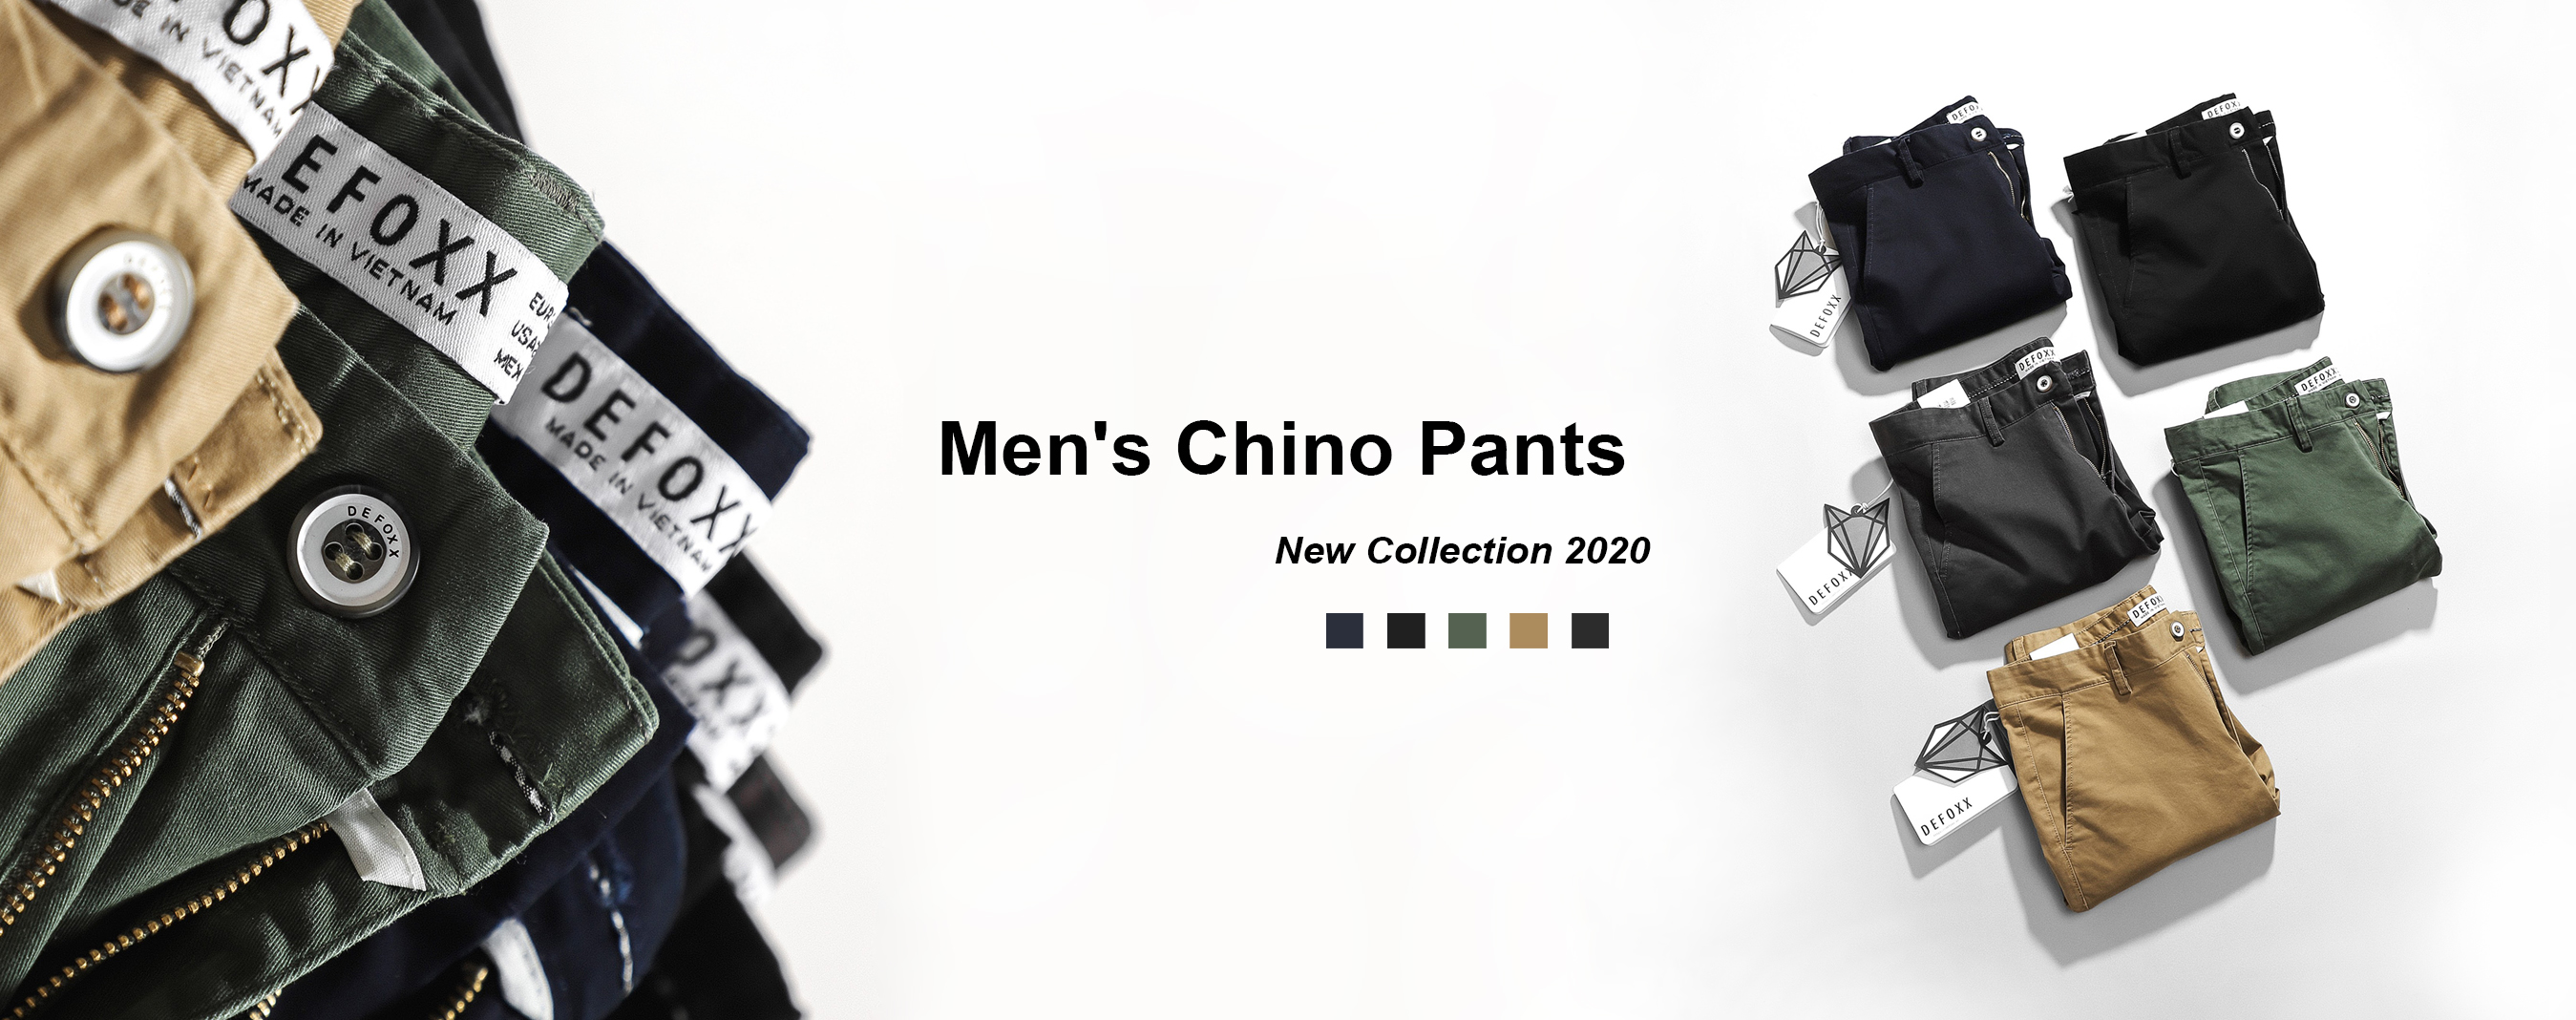 MEN'S CHINO PANTS